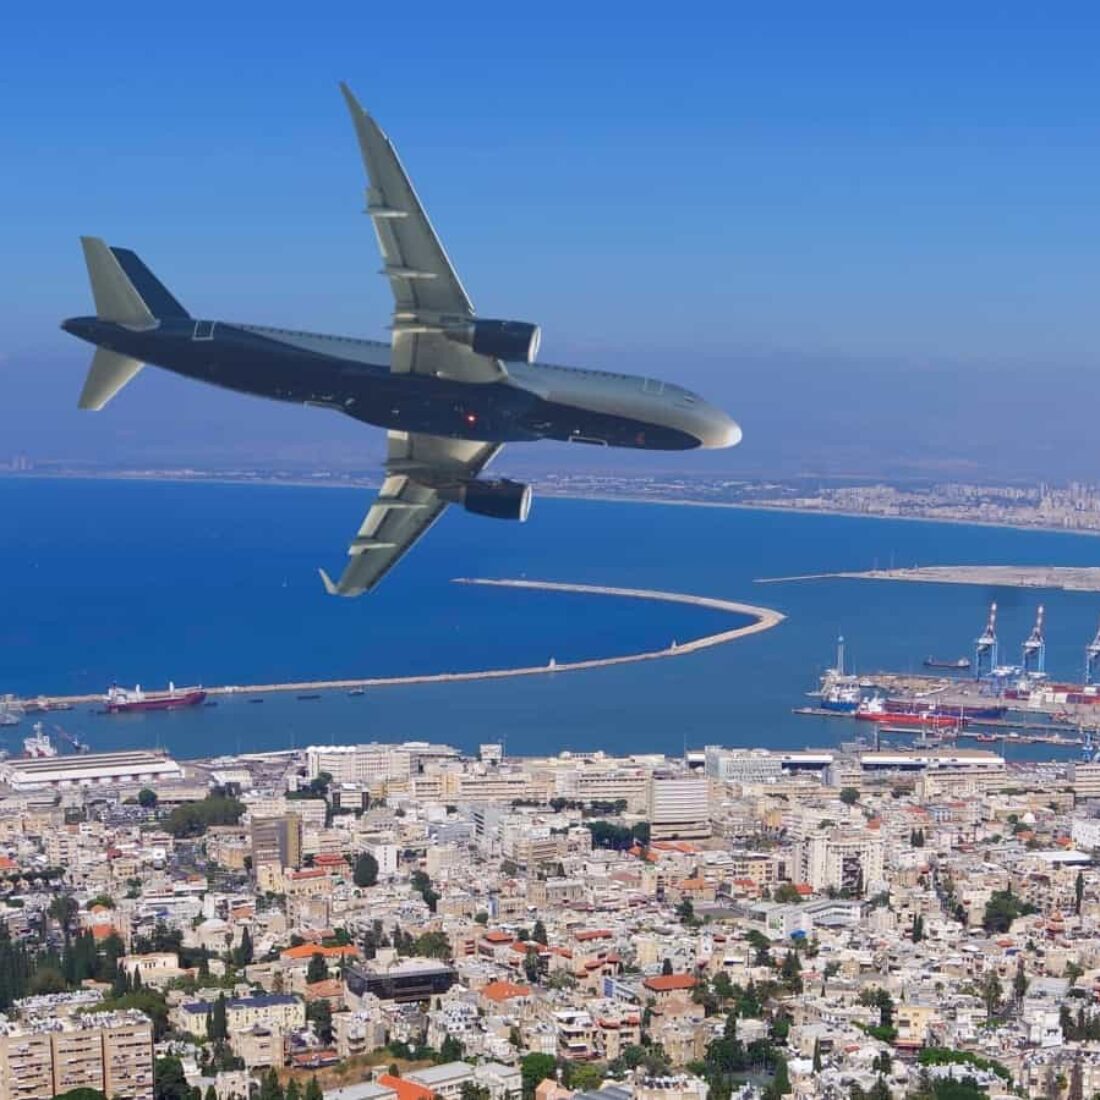 A plane flying over Haifa. Photo by Ana Kulagina via shutterstock.com